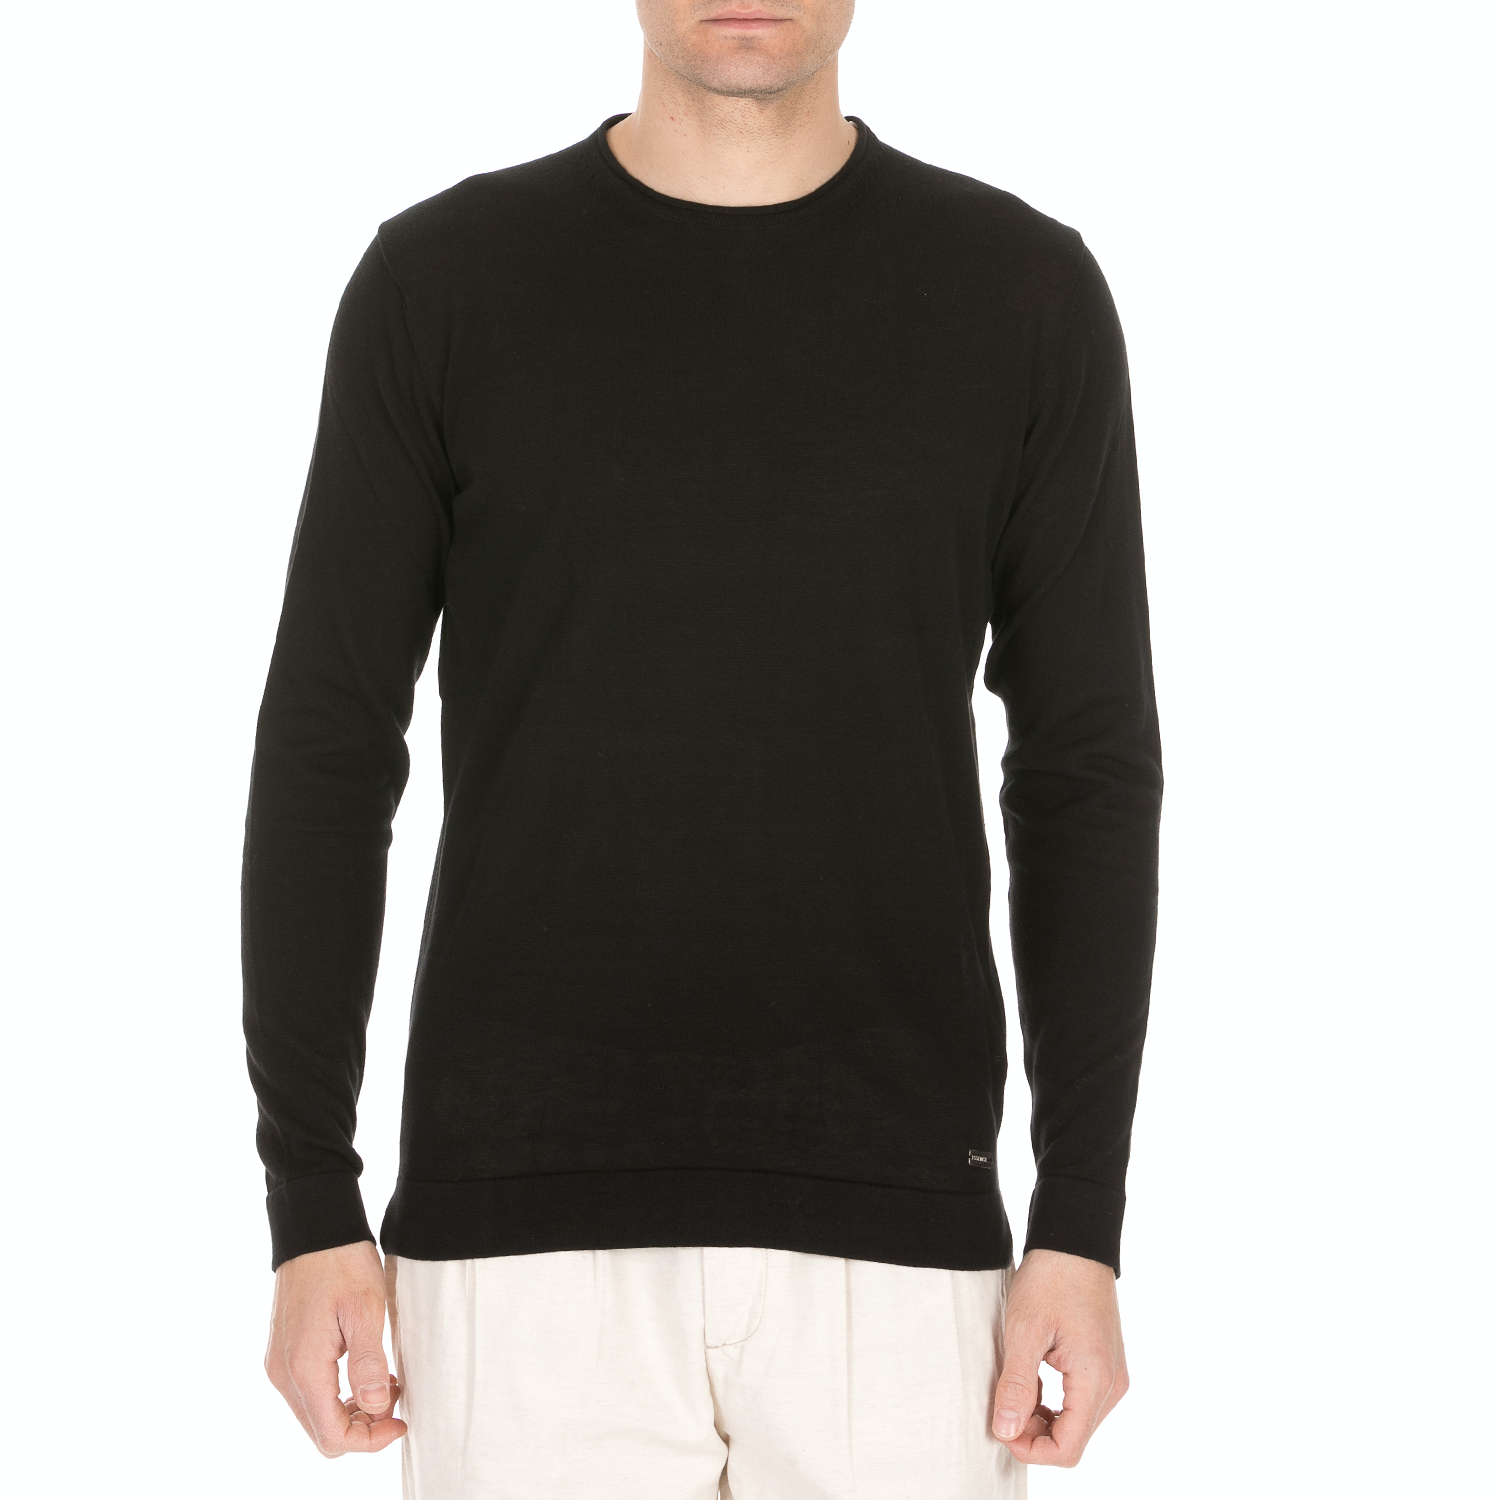 SSEINSE - Ανδρική πλεκτή μπλούζα SSEINSE GIROCOLLO μαύρη Ανδρικά/Ρούχα/Πλεκτά-Ζακέτες/Πουλόβερ